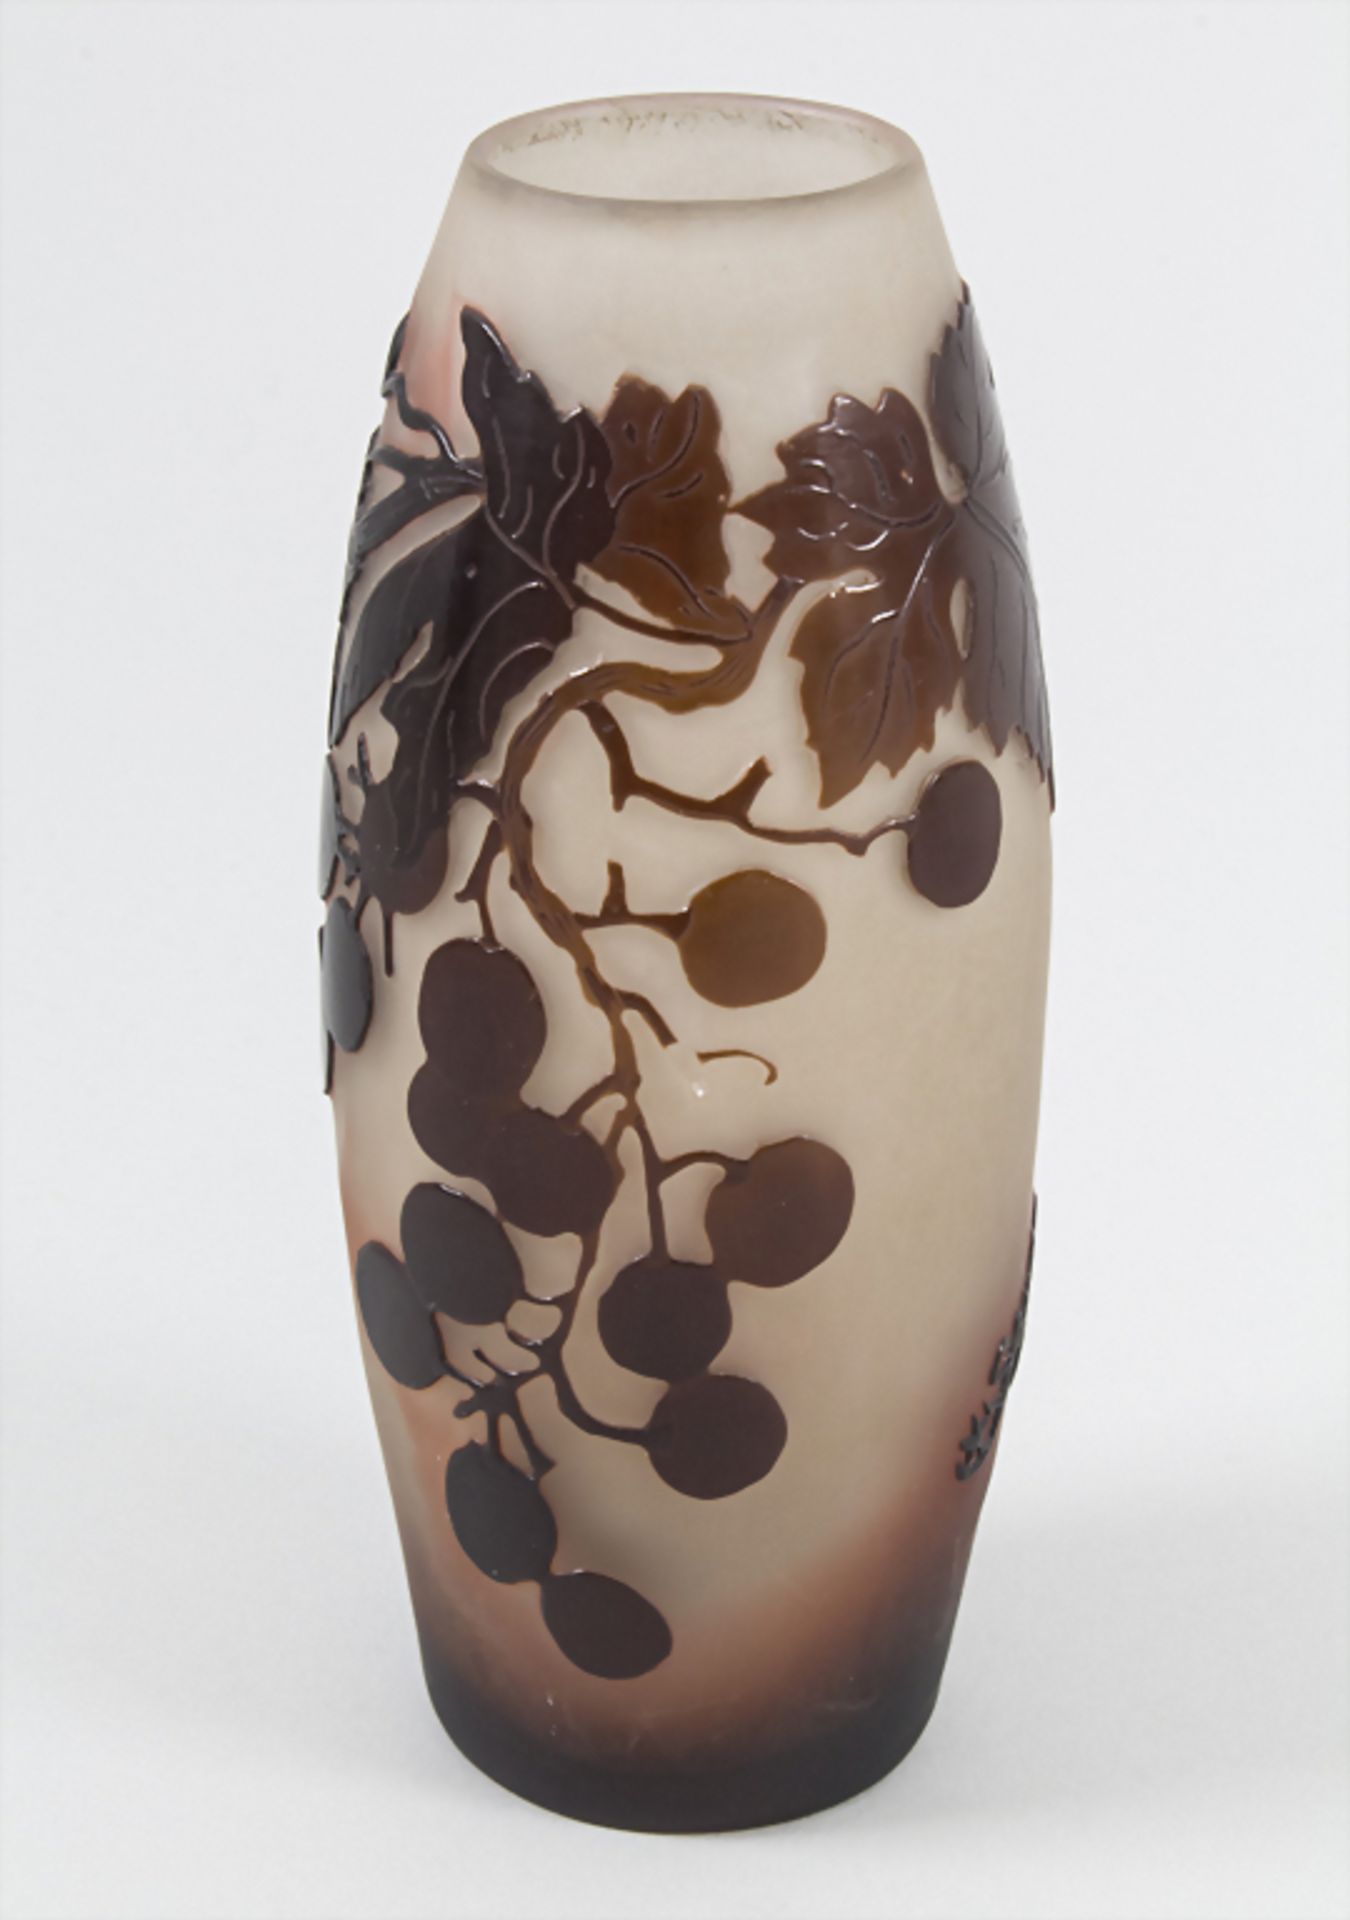 Jugendstil Vase mit Wein / An Art Nouveau cameo glass vase with wine, Emile Gallé, Ecole de Nancy,